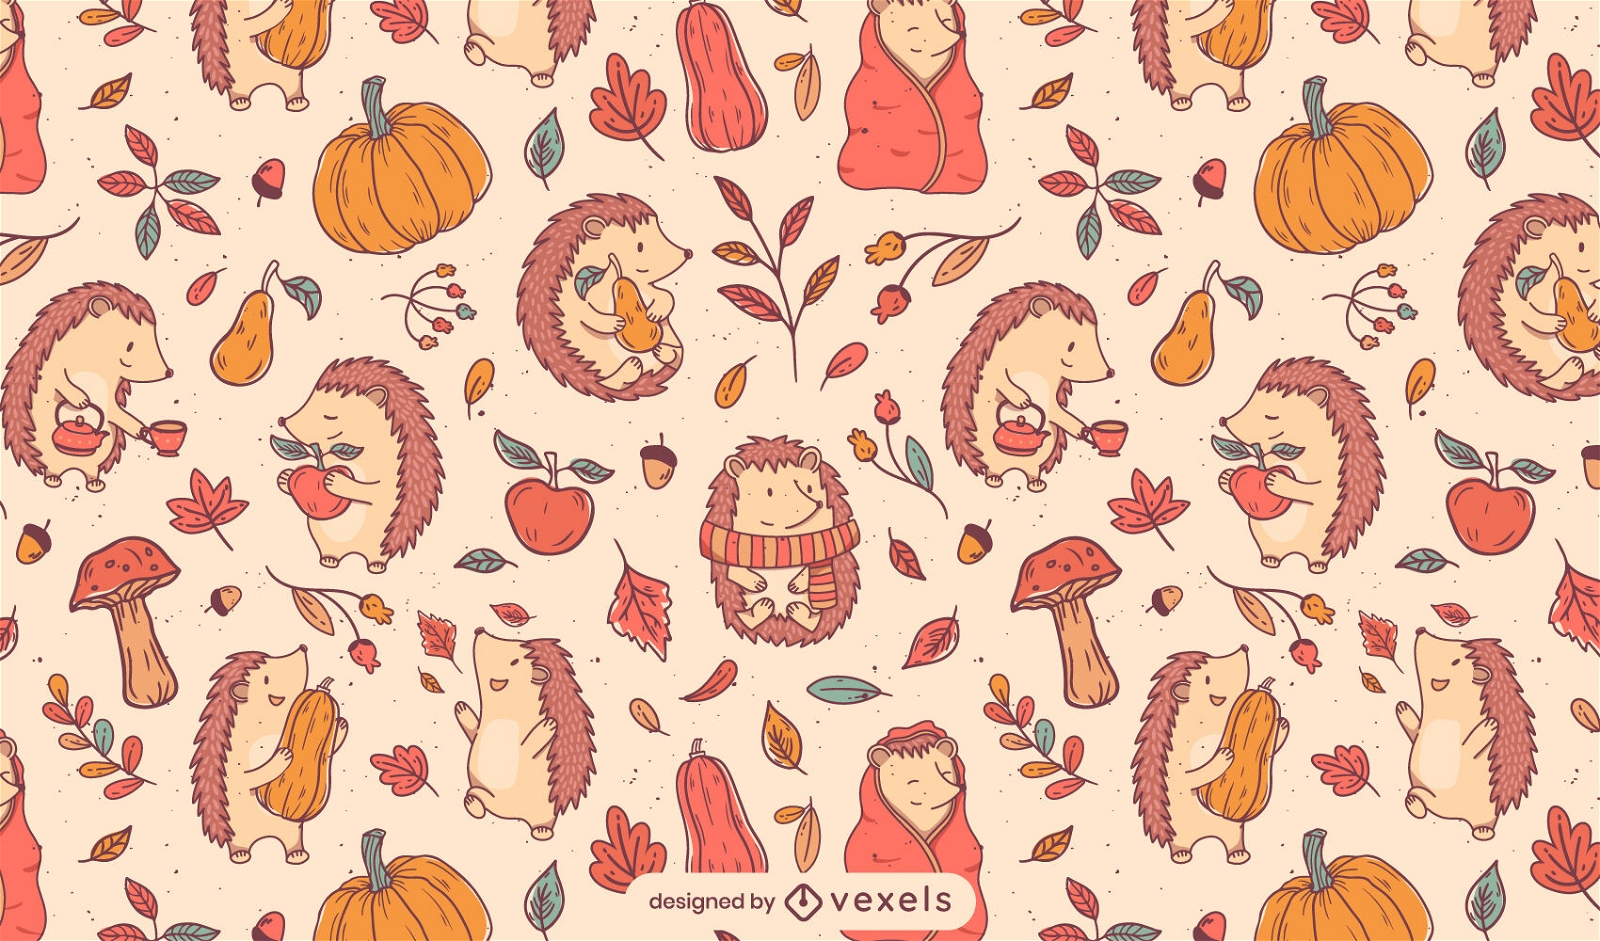 Hedgehogs and pumpkins pattern design